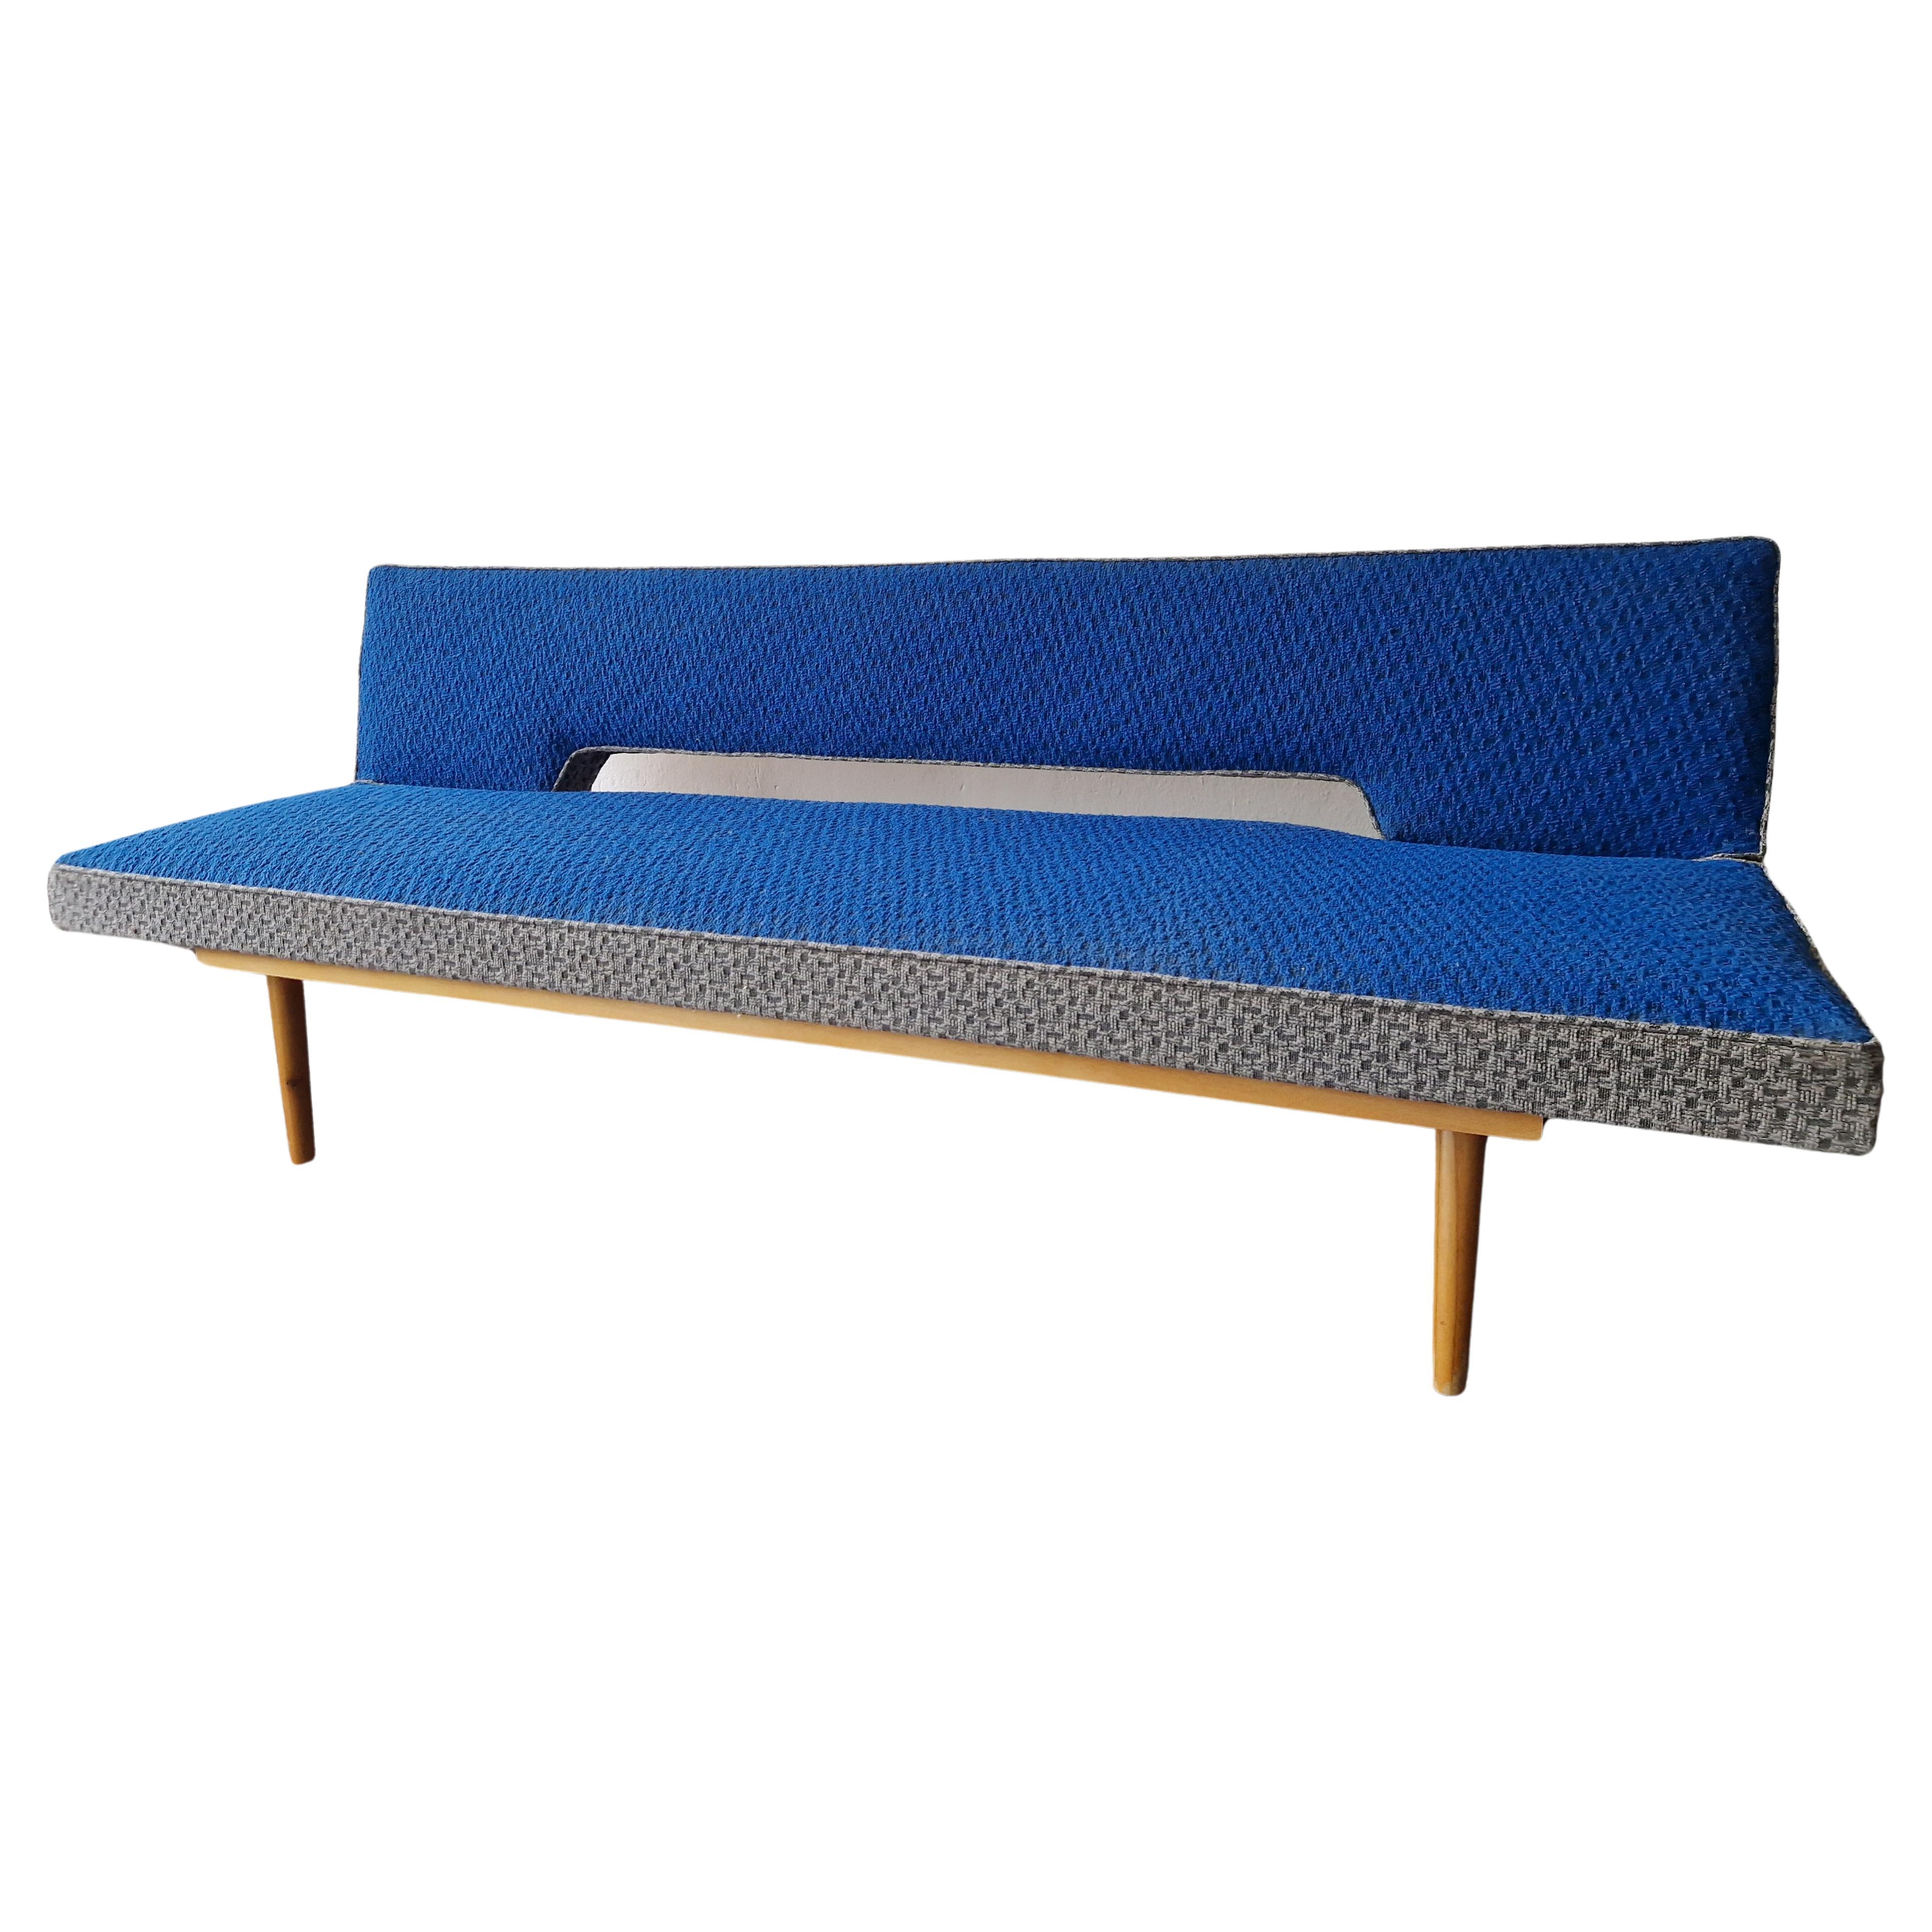 Midcentury Sofa or Daybed designed by Miroslav Navratil, 1960s.